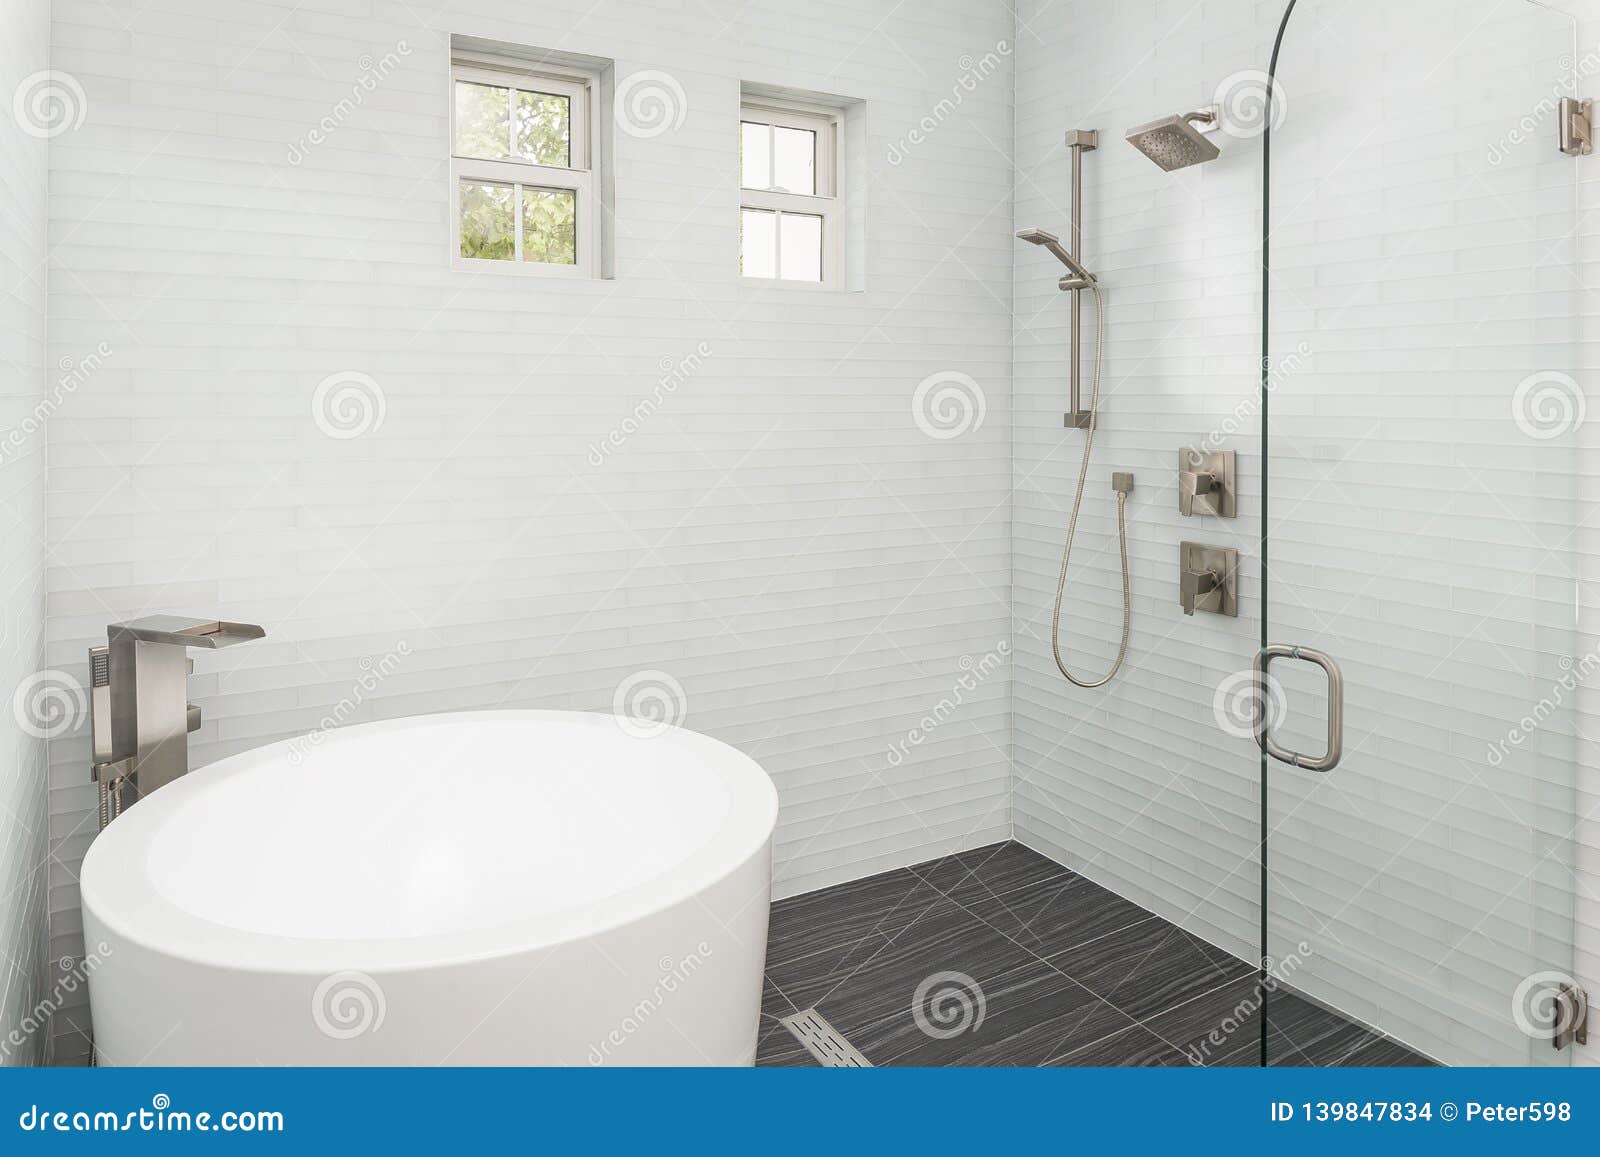 Modern And Elegant Bathtub Bathroom And Shower Fixtures Stock